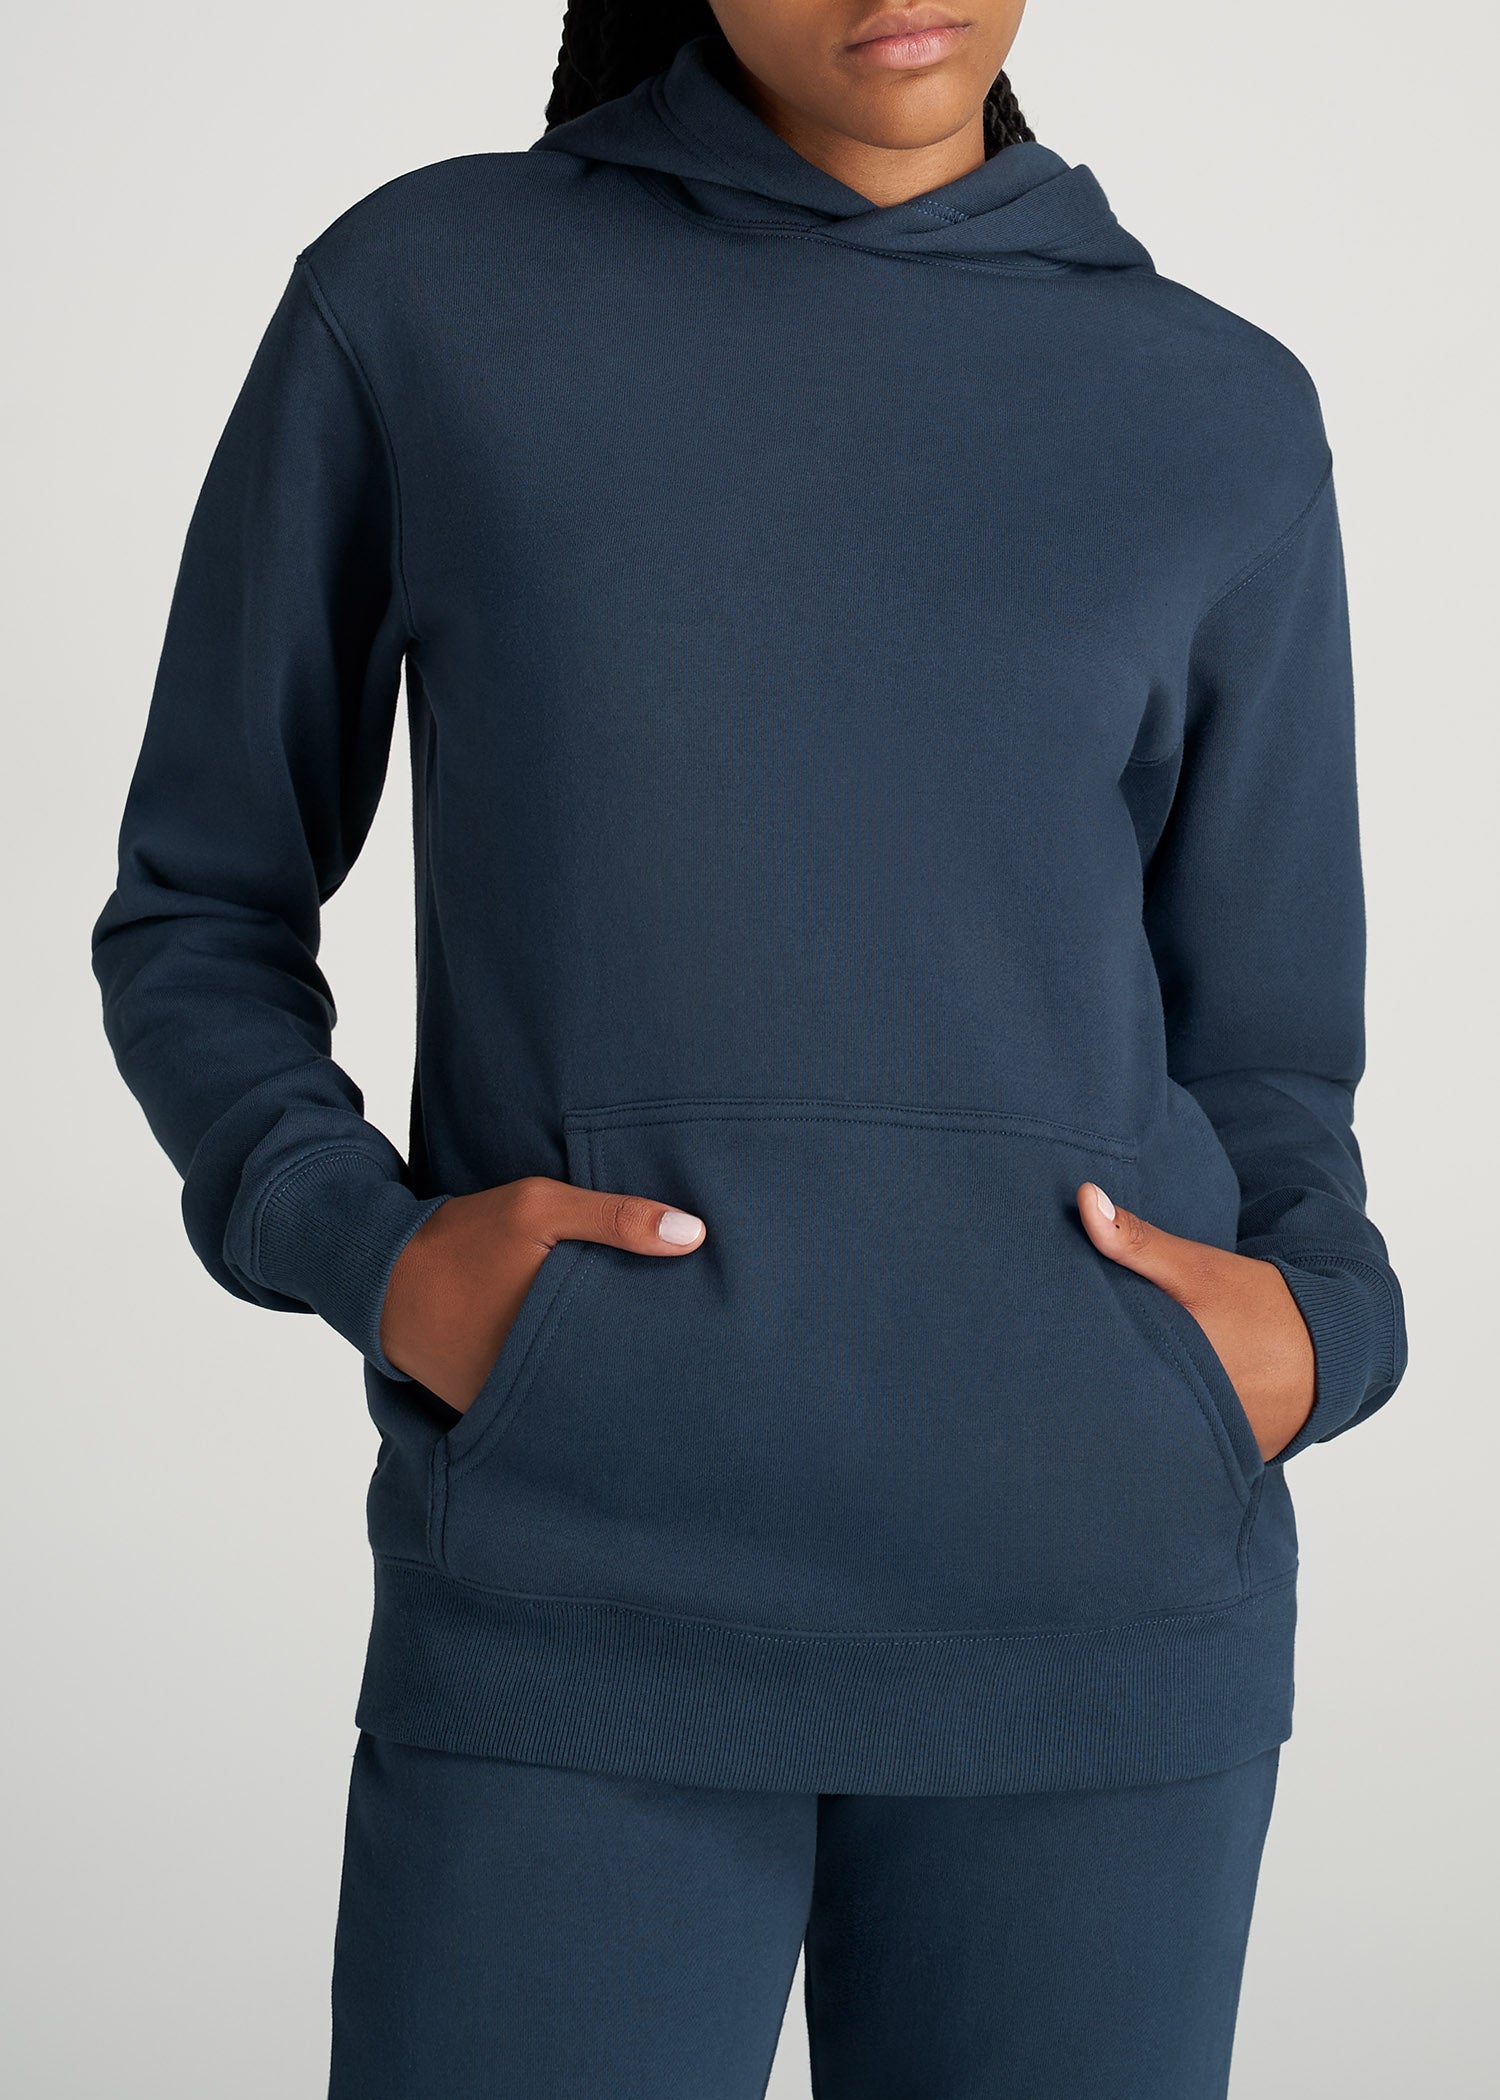 lululemon athletica Off-the-Shoulder Sweaters for Women - Poshmark